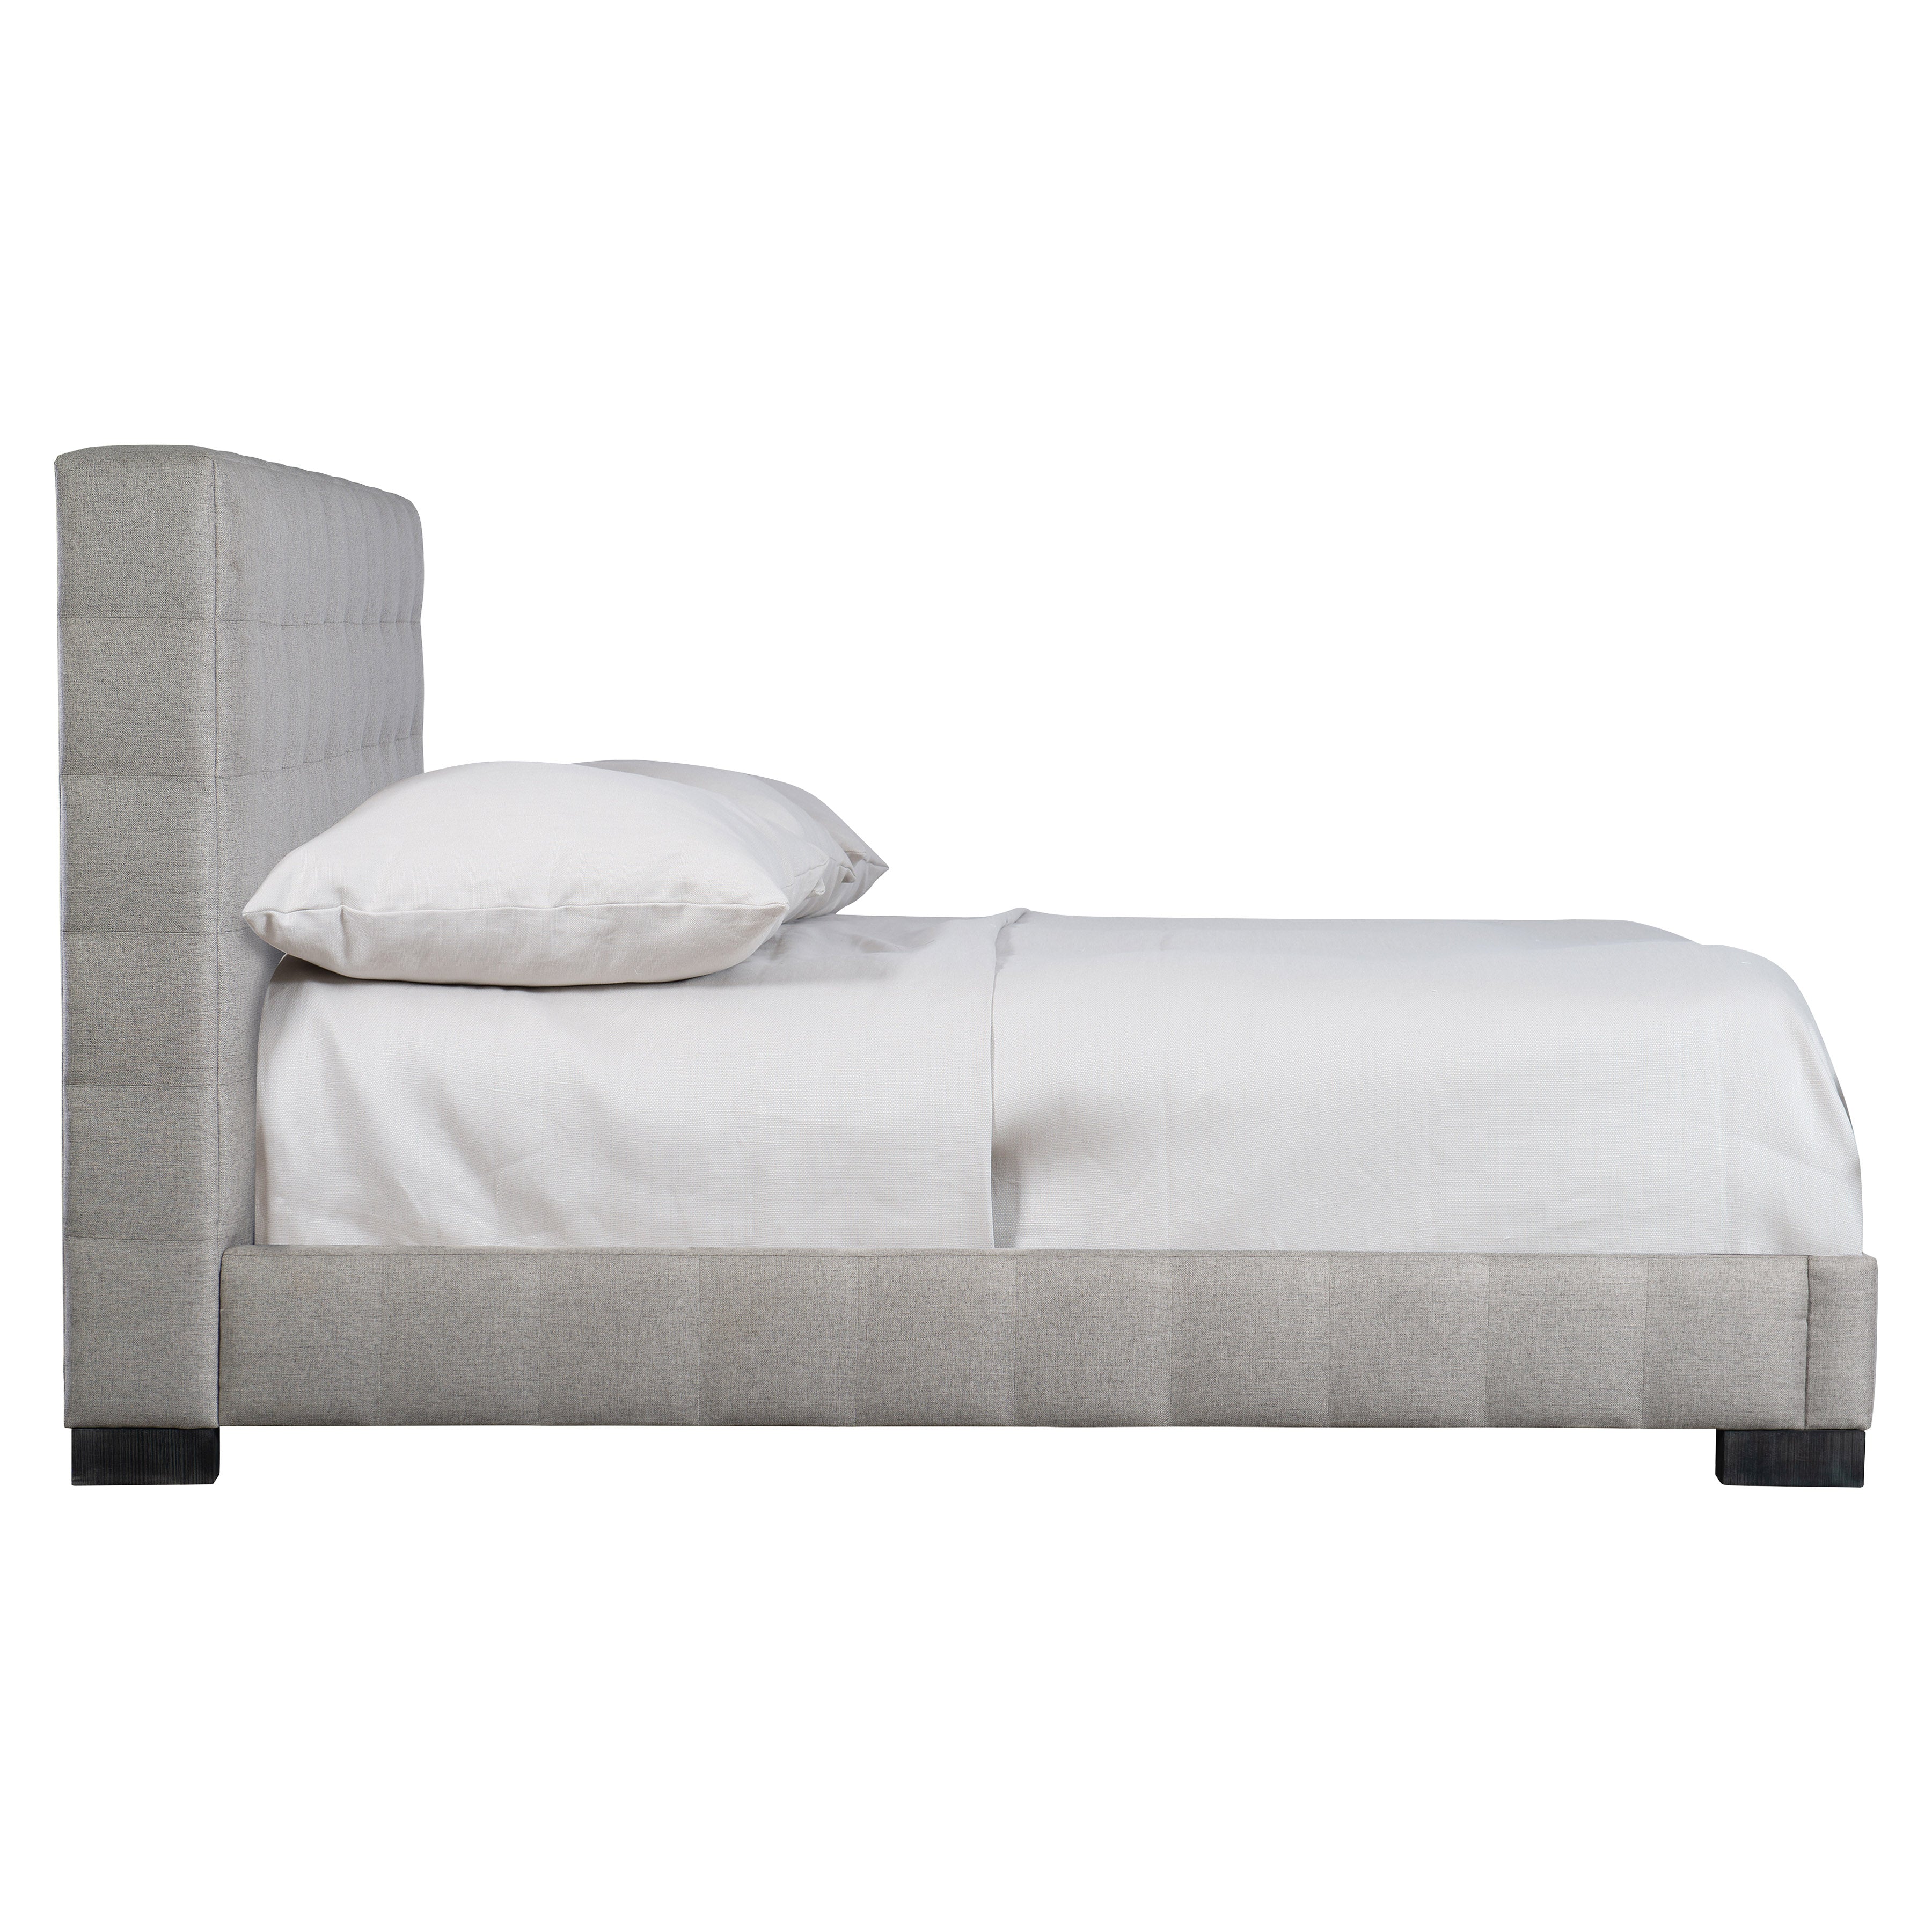 LaSalle Upholstered Queen Panel Bed